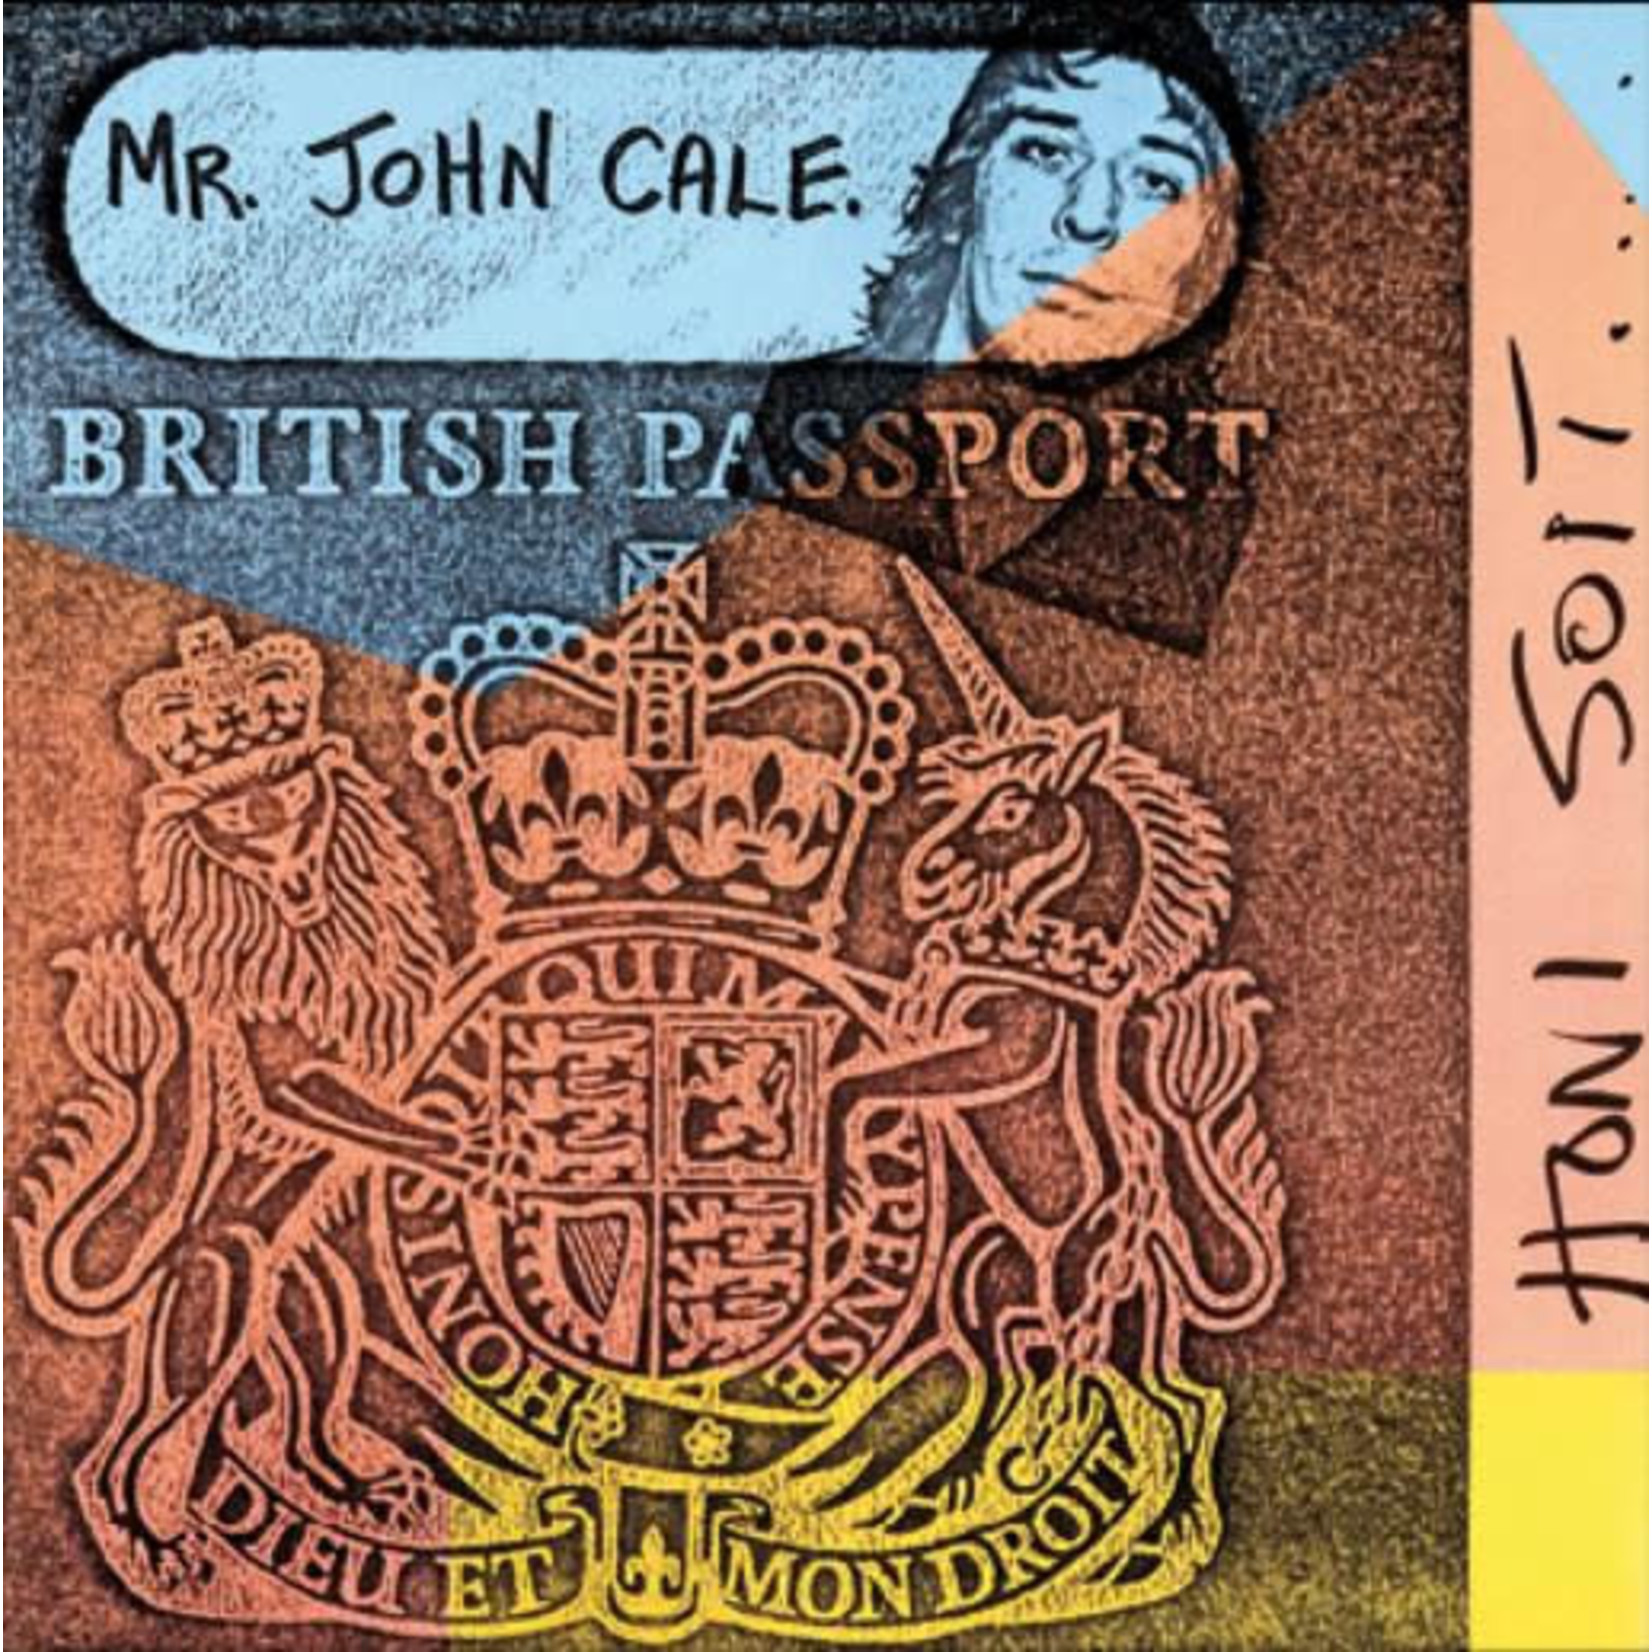 [Vintage] John Cale - Honi Soit (British Passport)